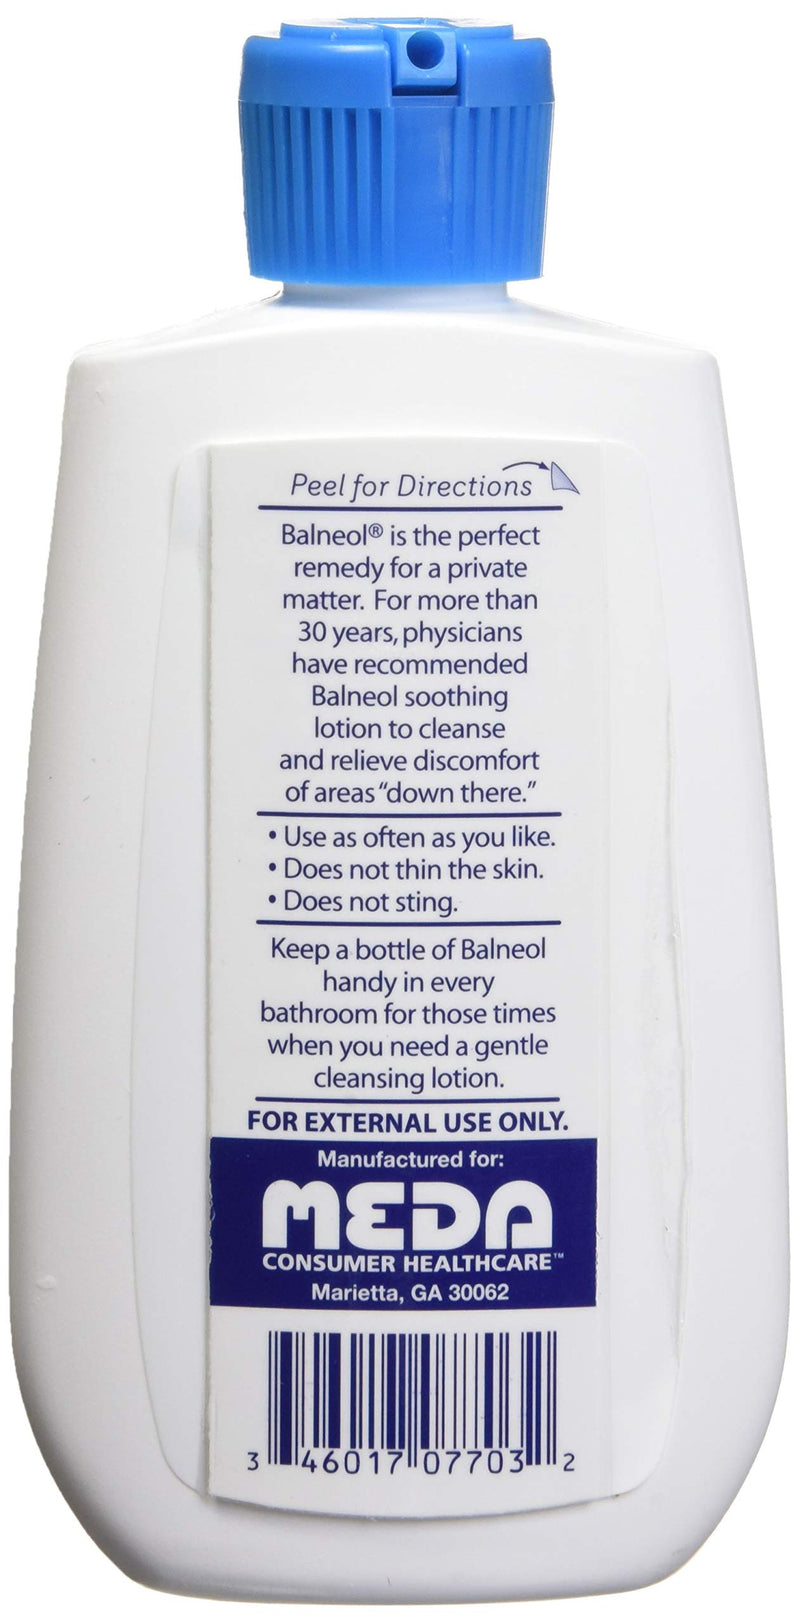 [Australia] - Balneol Hygienic Cleansing Lotion, 3 oz. (Pack of 3) 